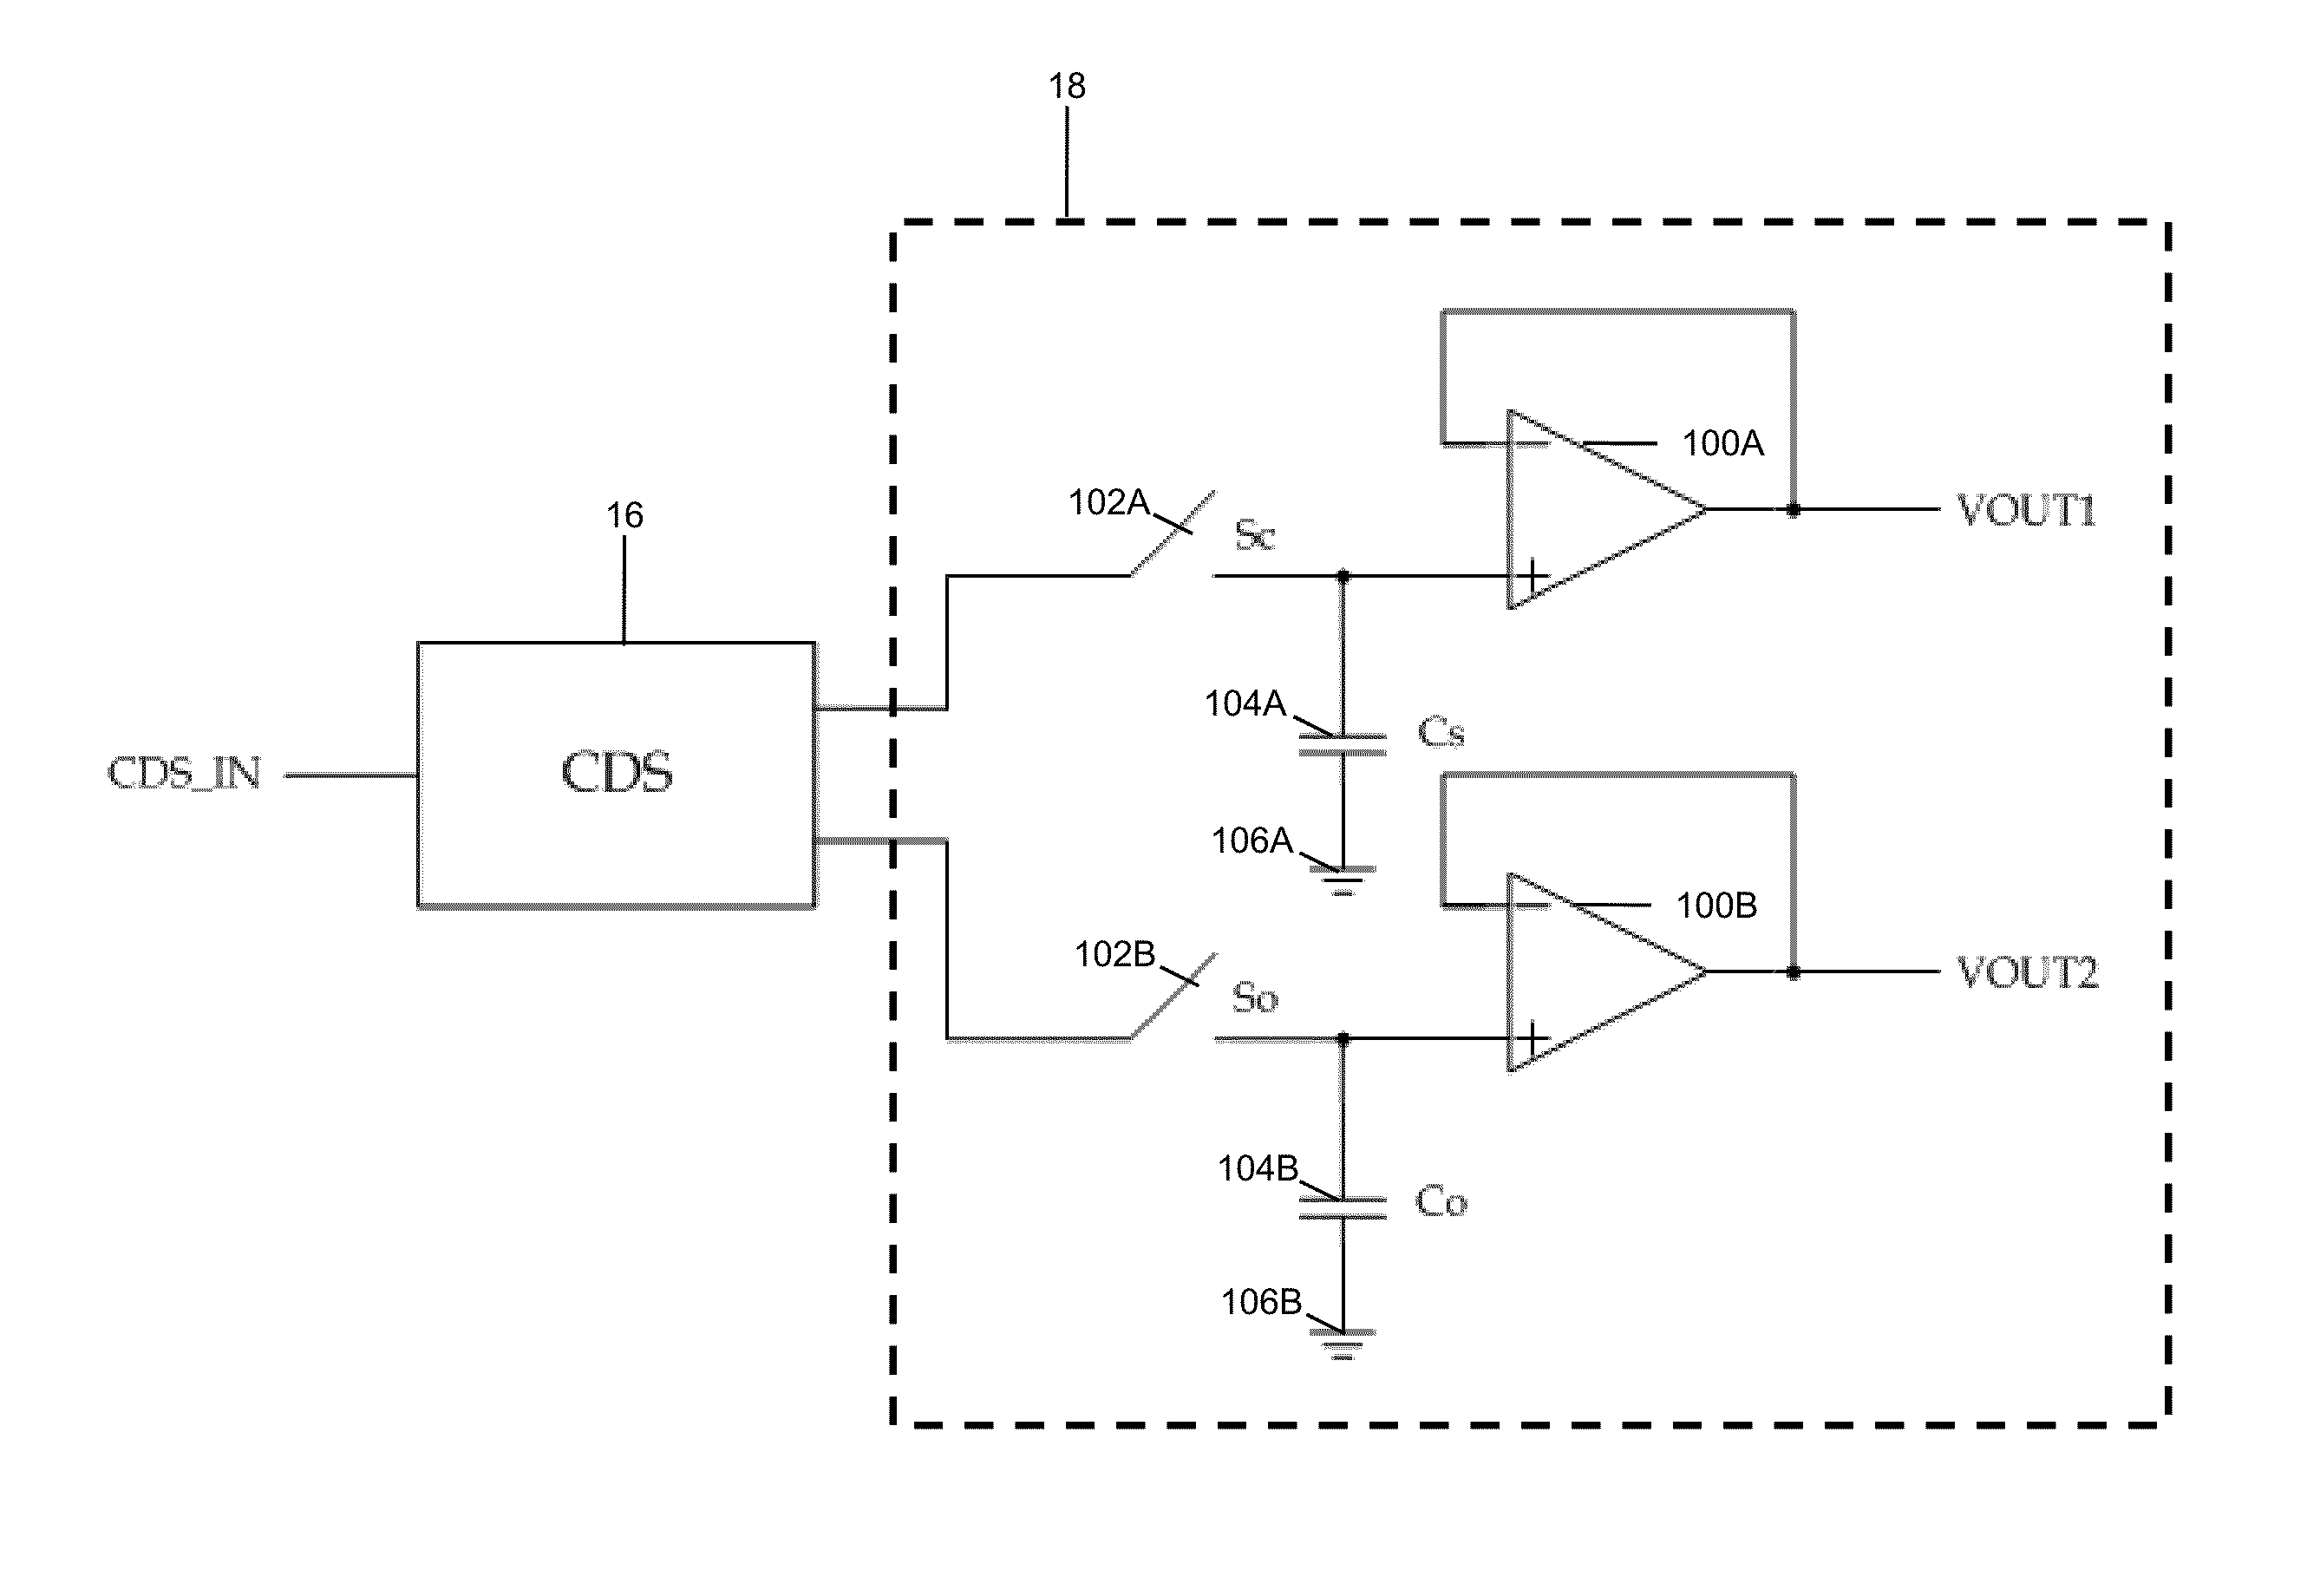 Digital image processing readout integrated circuit (ROIC) having multiple sampling circuits